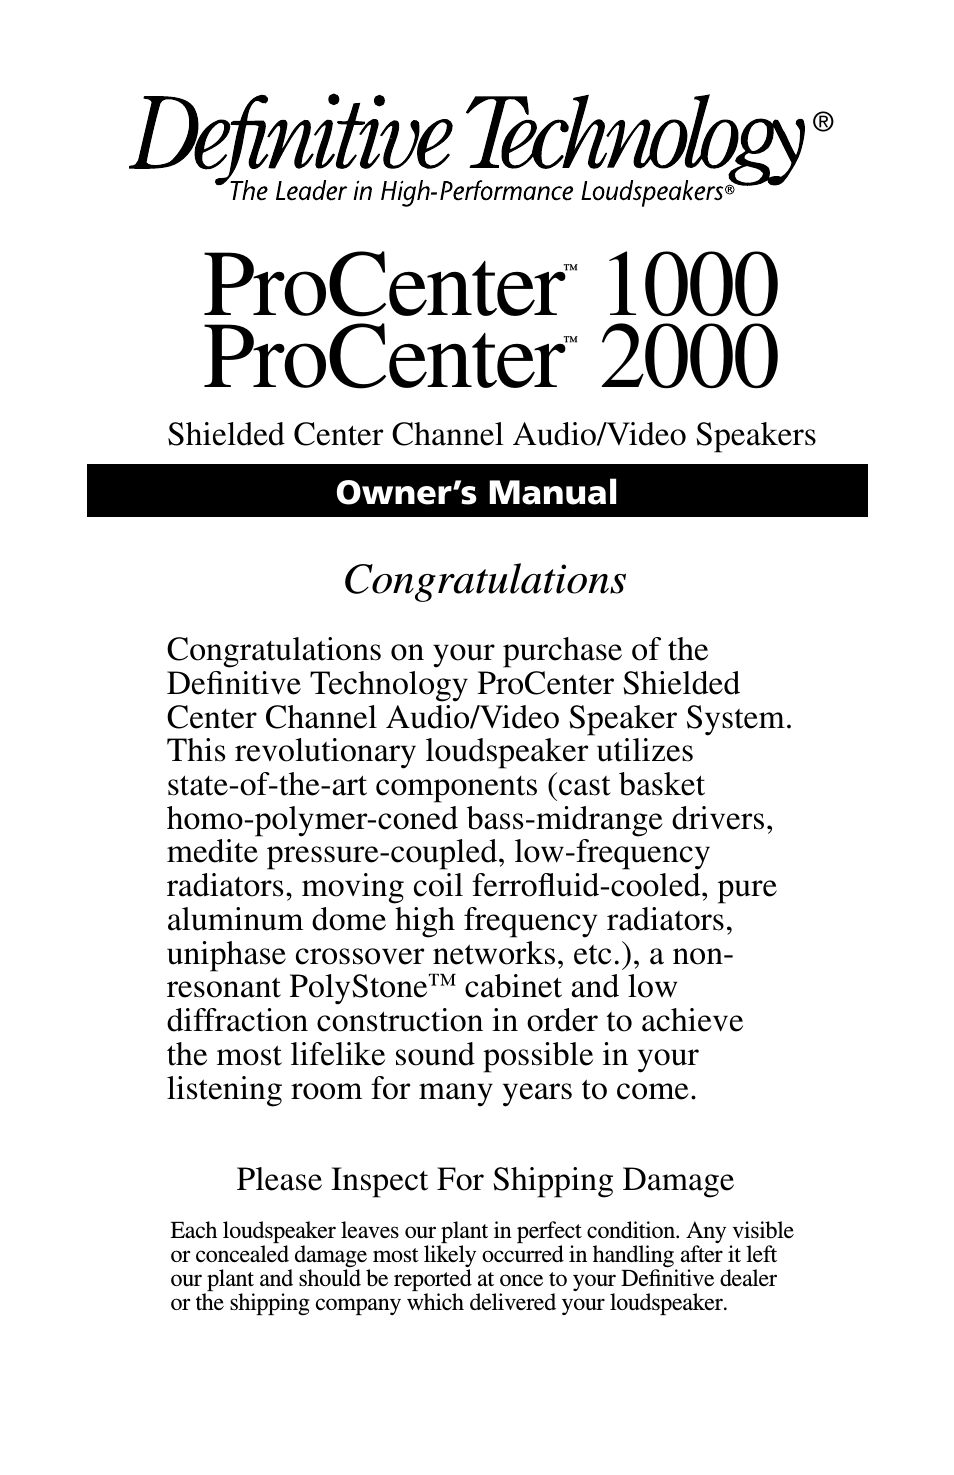 ProCenter 2000